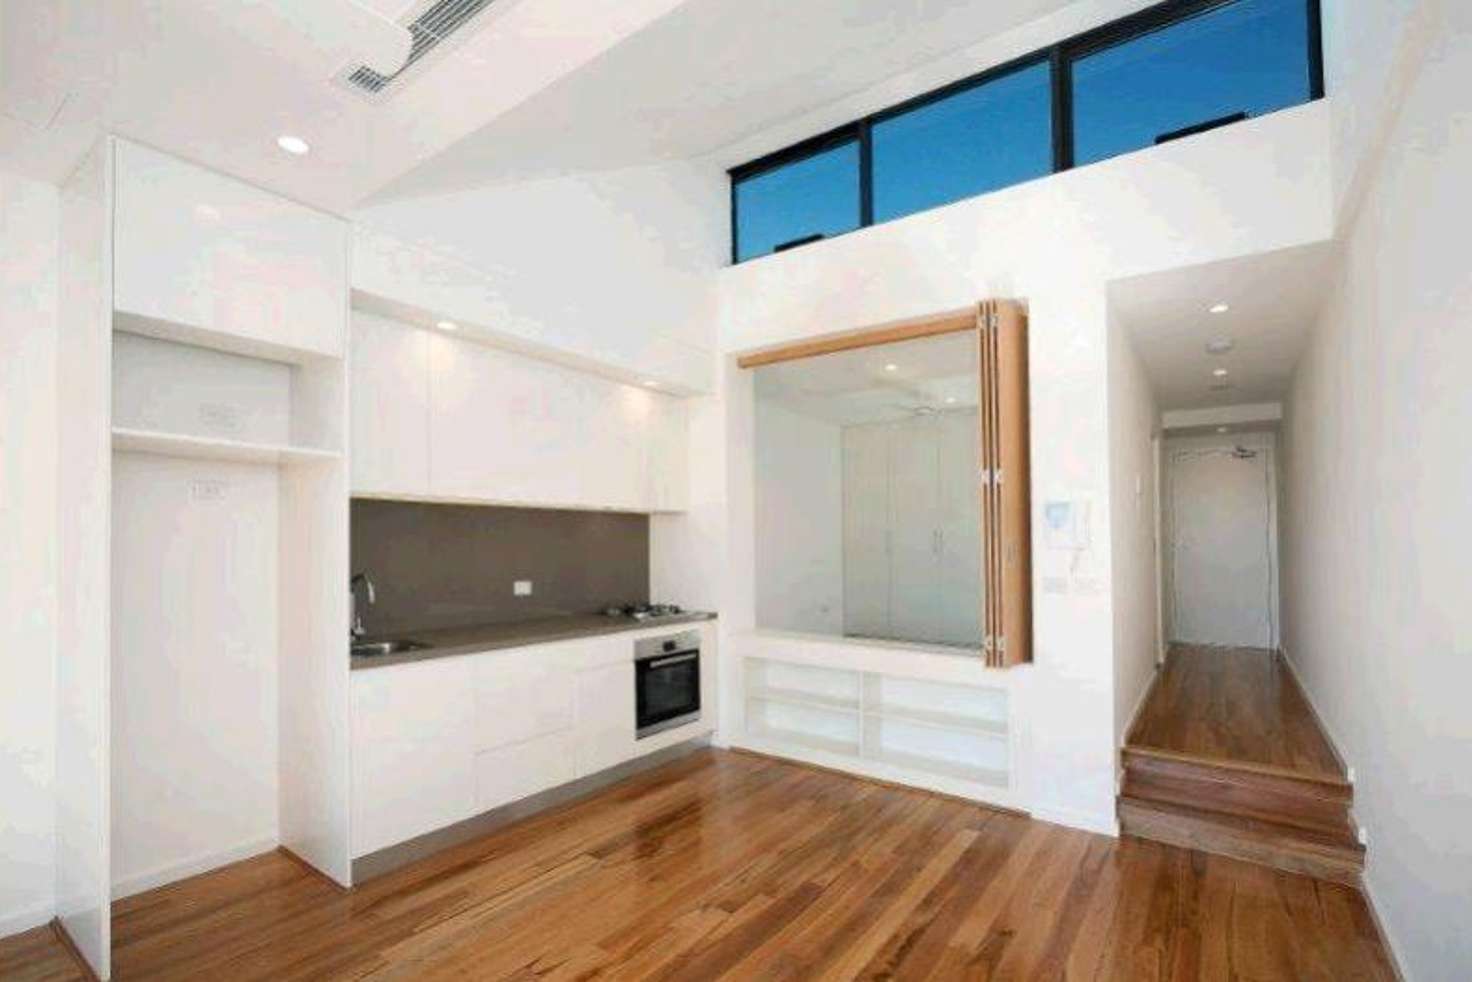 Main view of Homely apartment listing, 305/10-20 Anzac Parade Kensington, Kensington NSW 2033